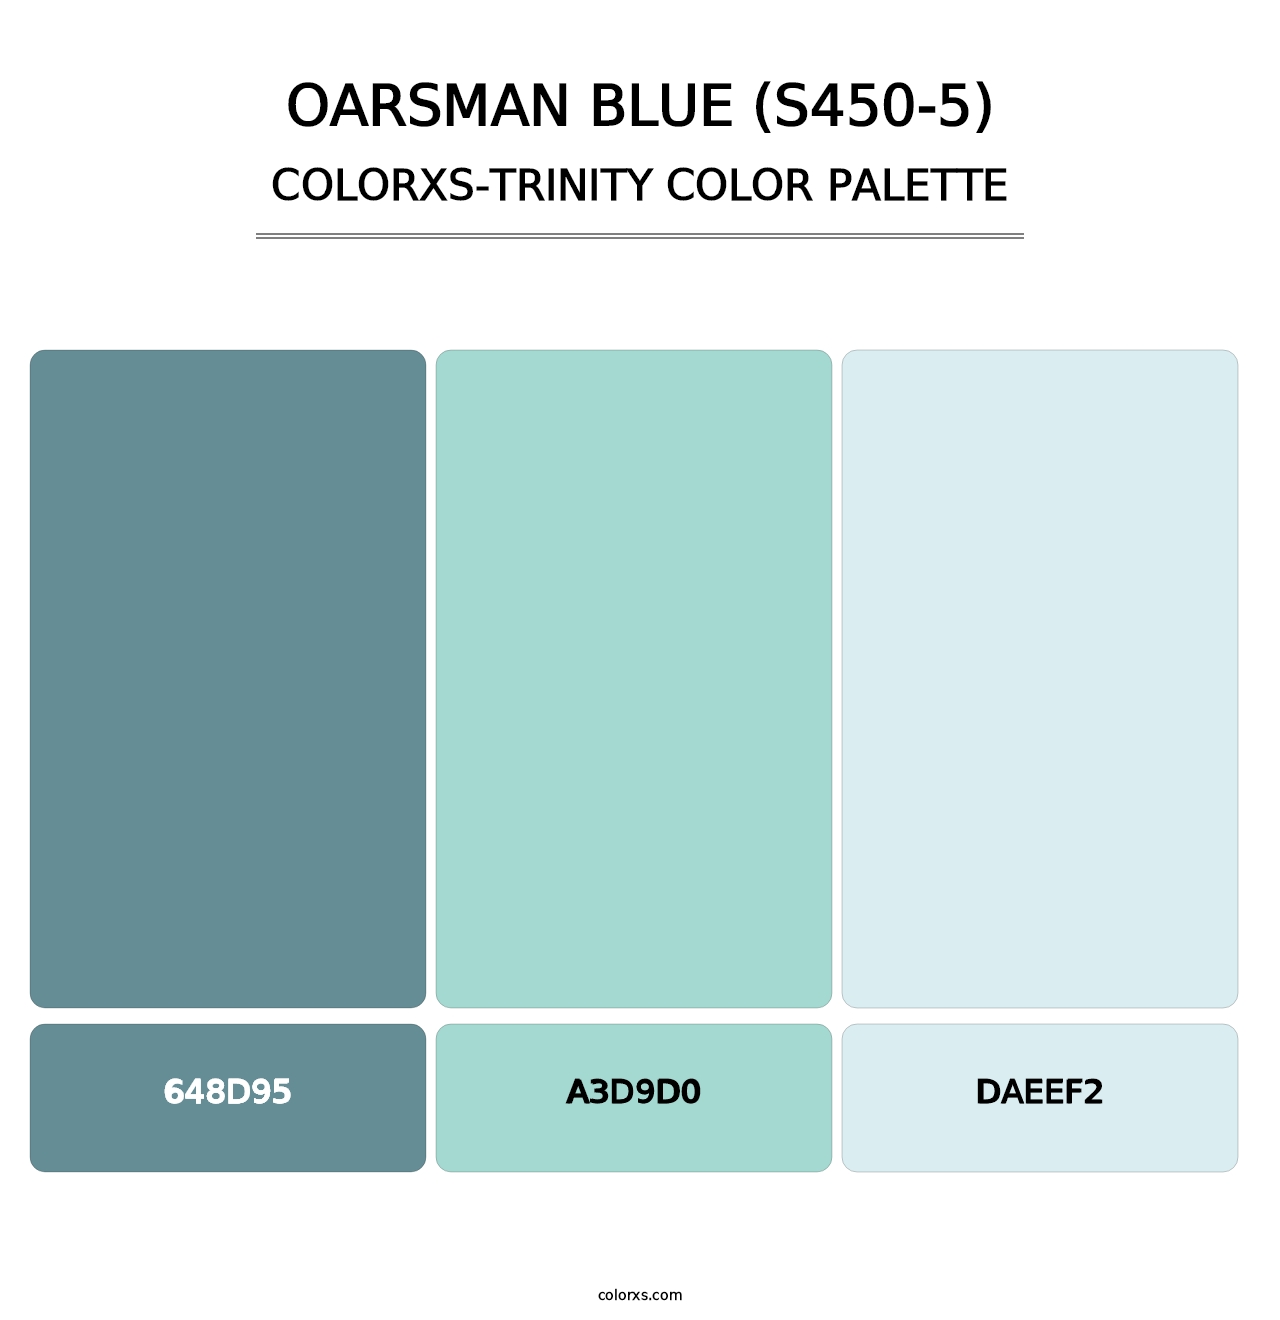 Oarsman Blue (S450-5) - Colorxs Trinity Palette